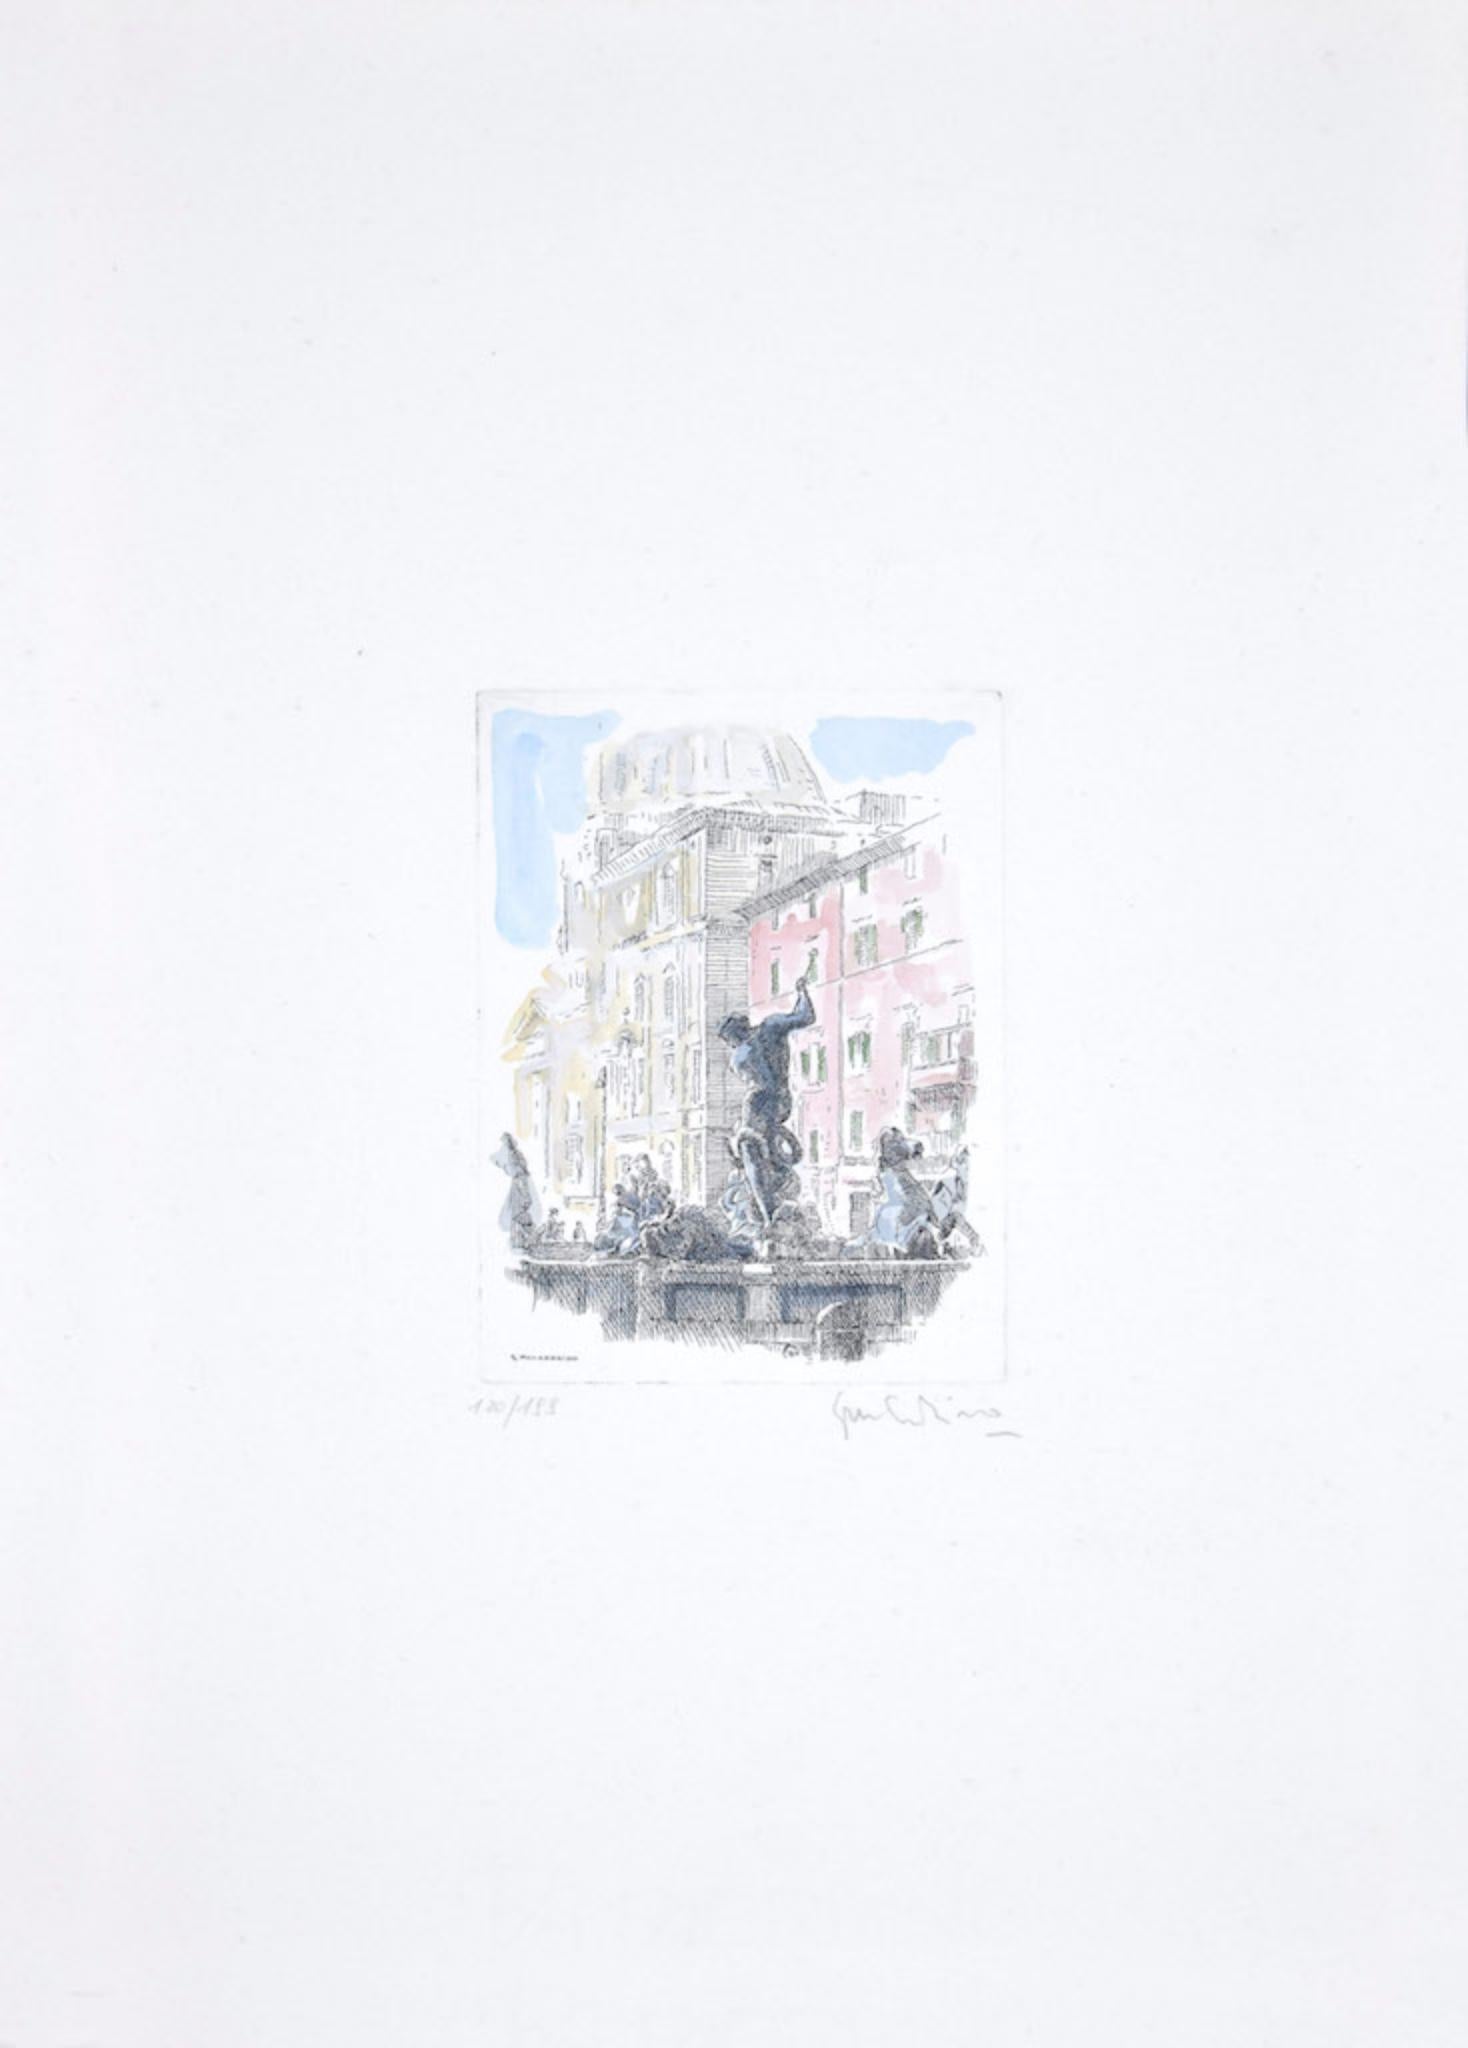 Navona Square - Original Etching by Giuseppe Malandrino - 1960 For Sale 1